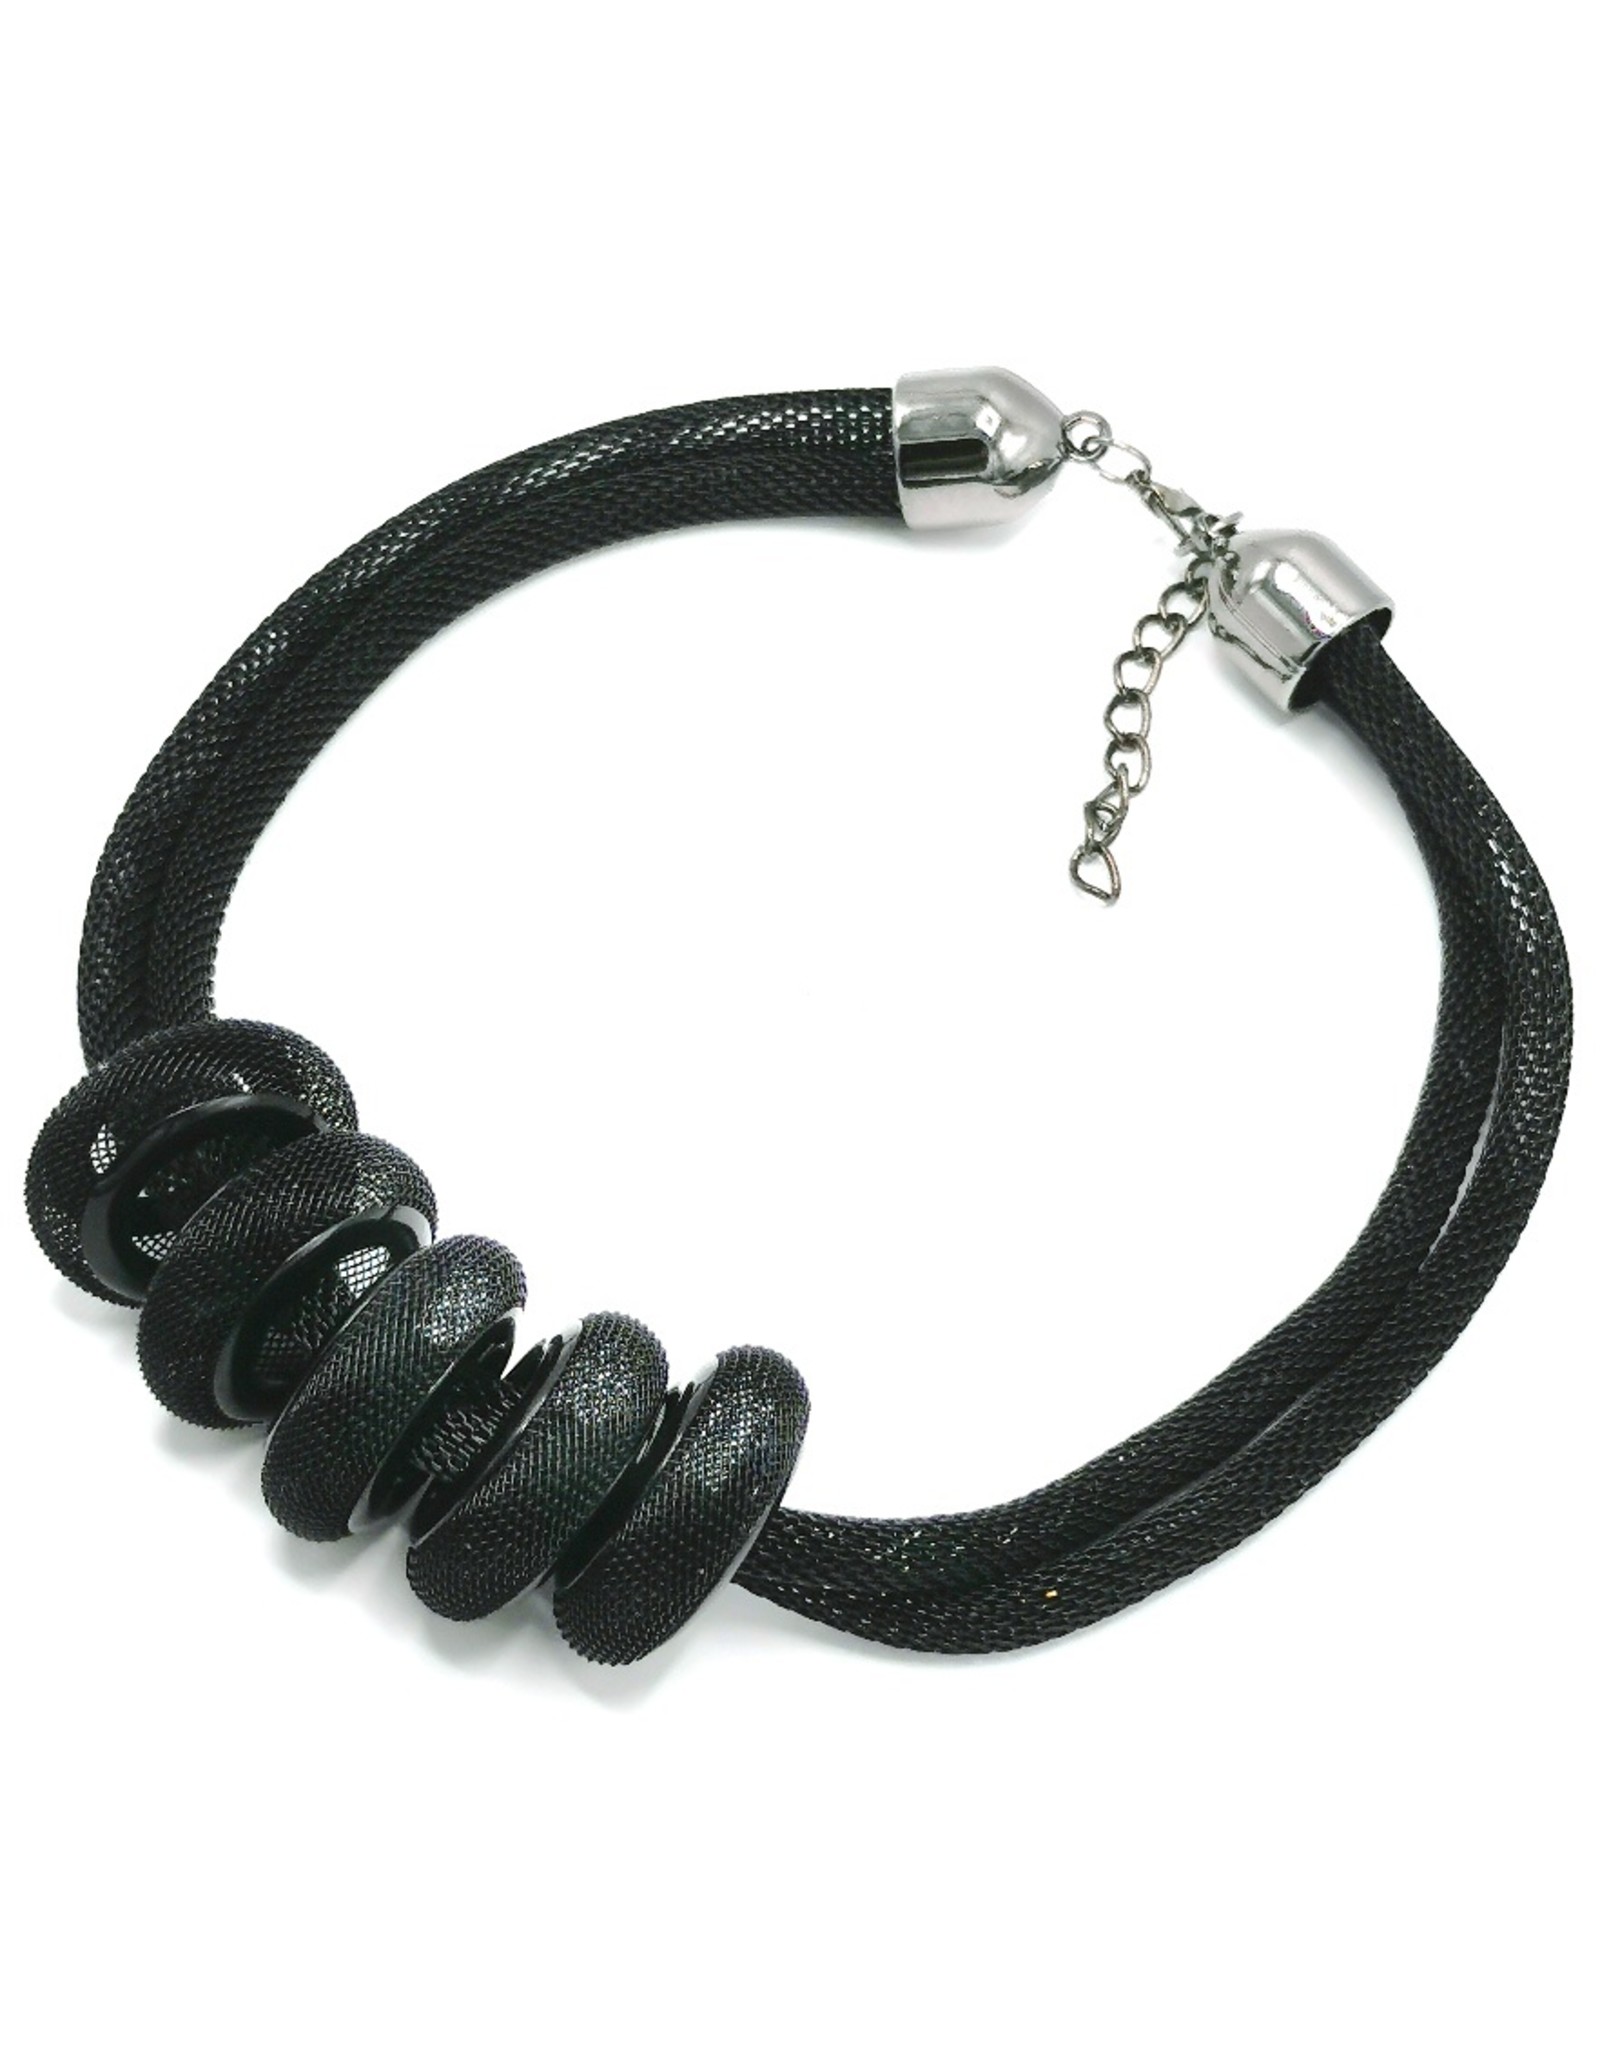 Trukado Jewellery - Braided design necklace black, nickel free